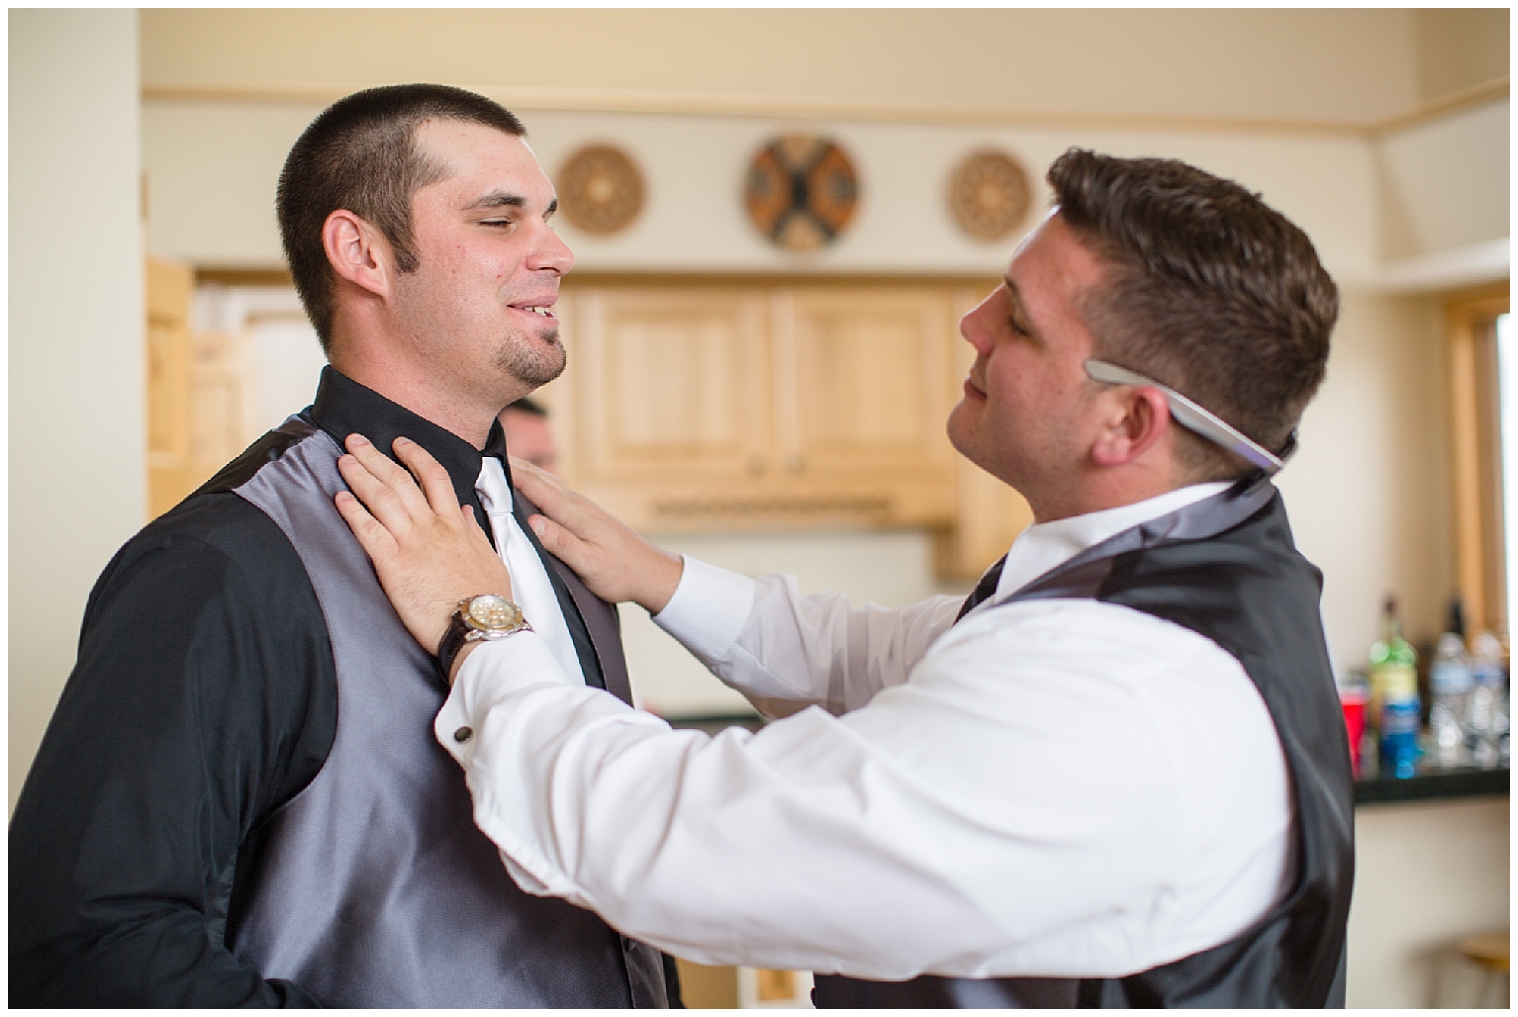 Groomsman adjusts the groom's tie prior to a Sevens wedding.